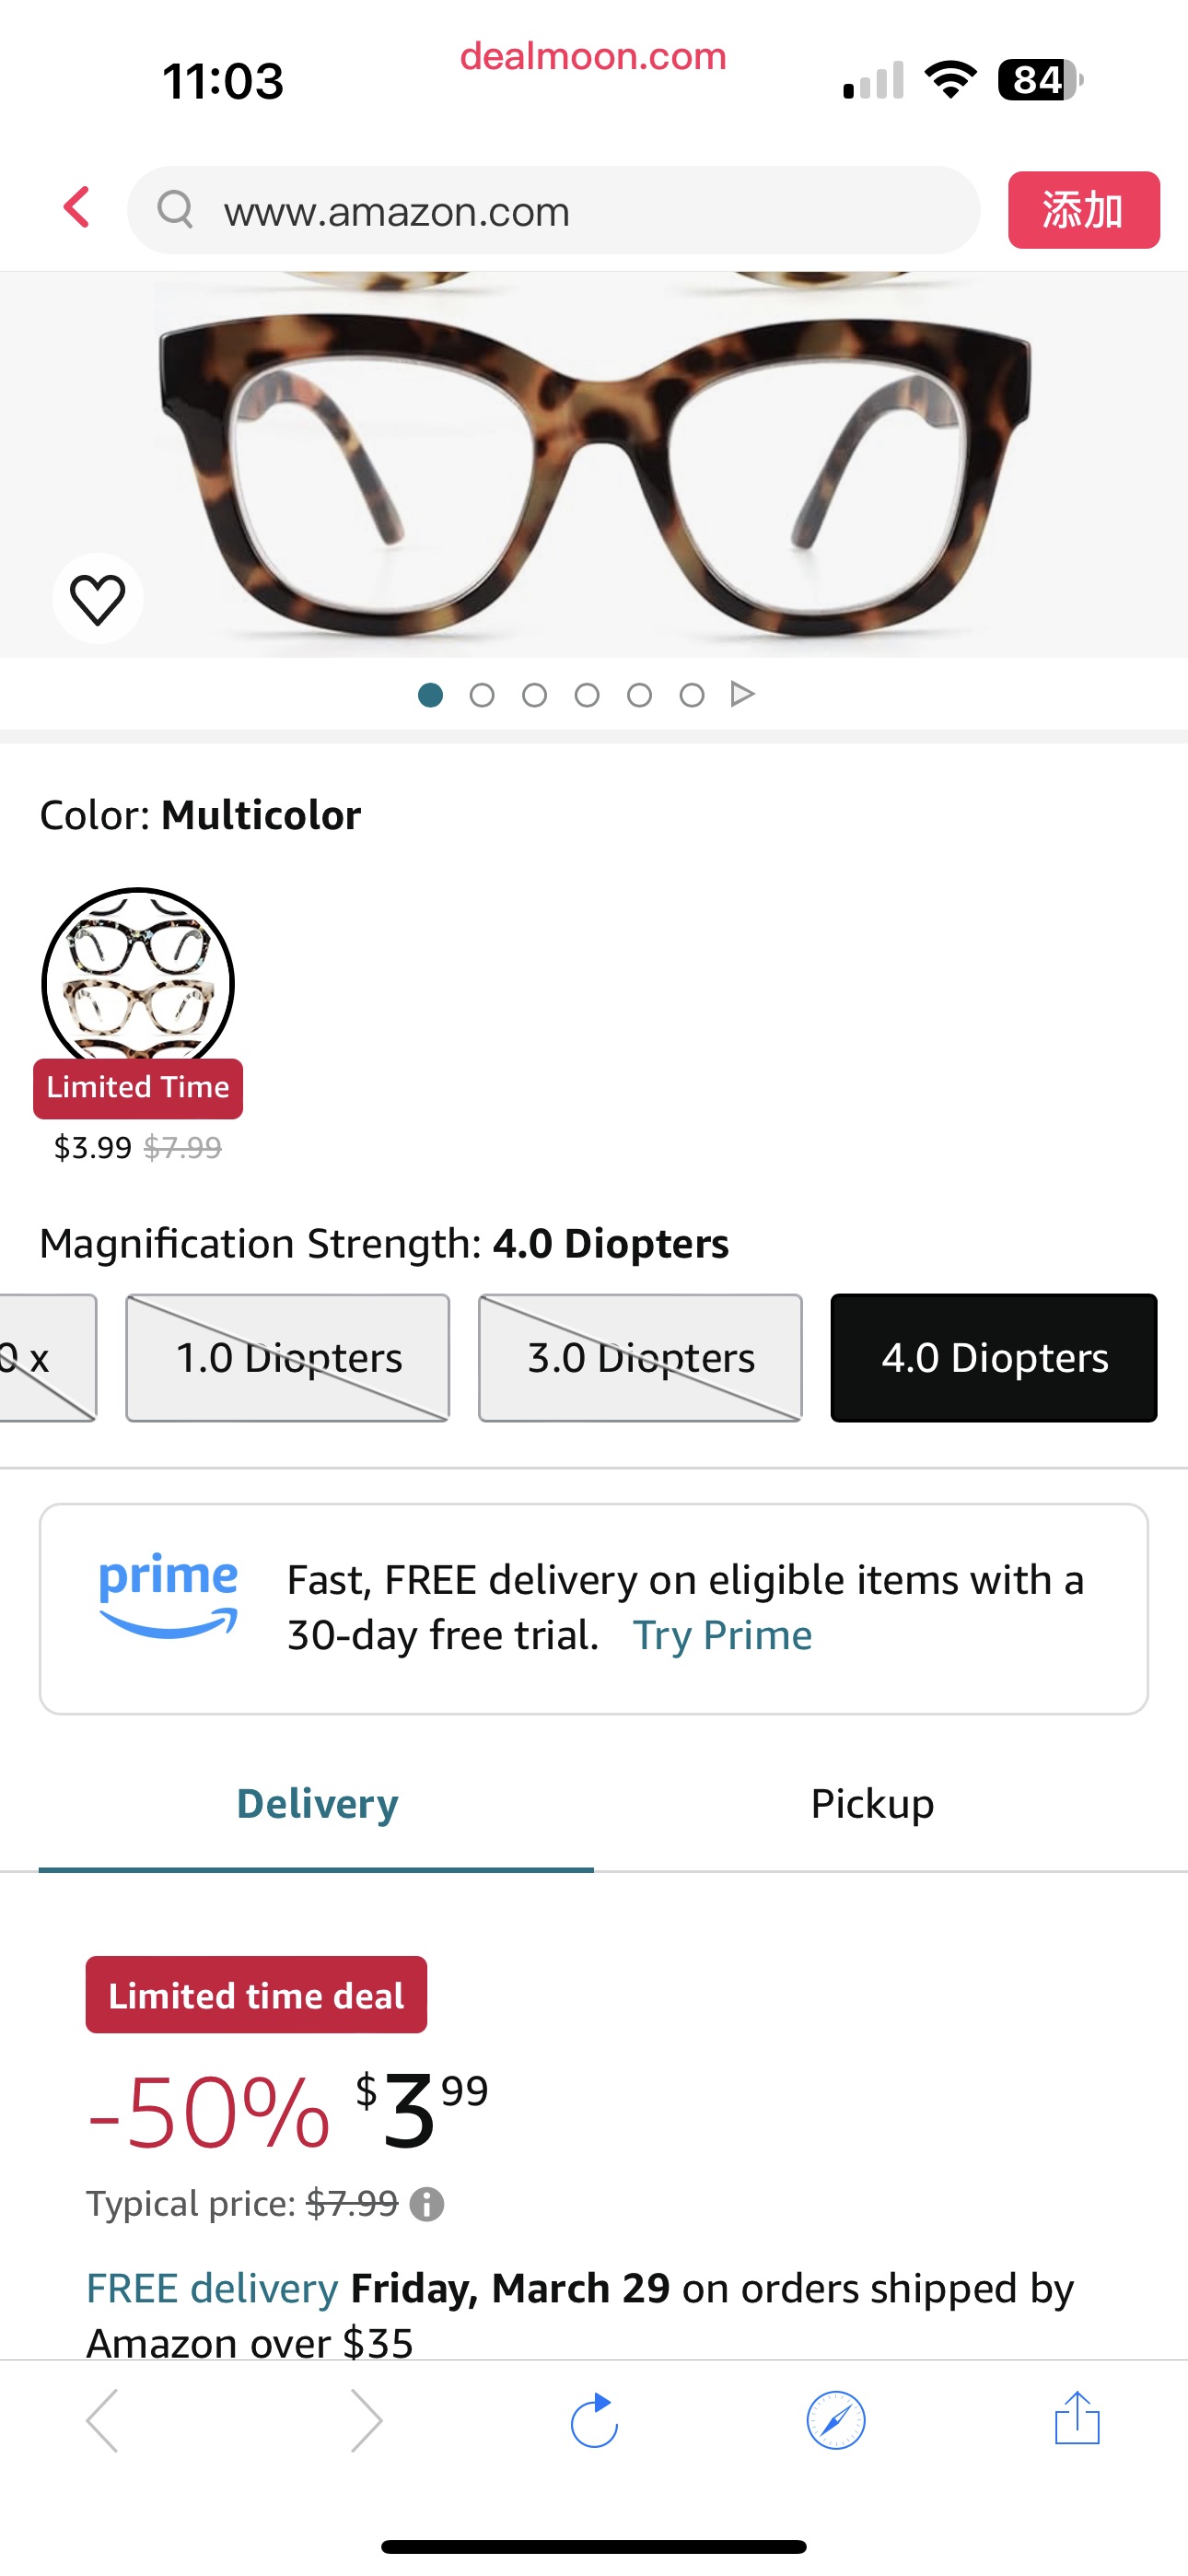 Amazon.com: VOGPOPER 4 Packs Blue Light Blocking Eyeglasses Quality Spring Hinge Colorful Computer Readers for Women Men, Retro Style (multicolor, 4, diopters) : Health & Household近视眼镜四